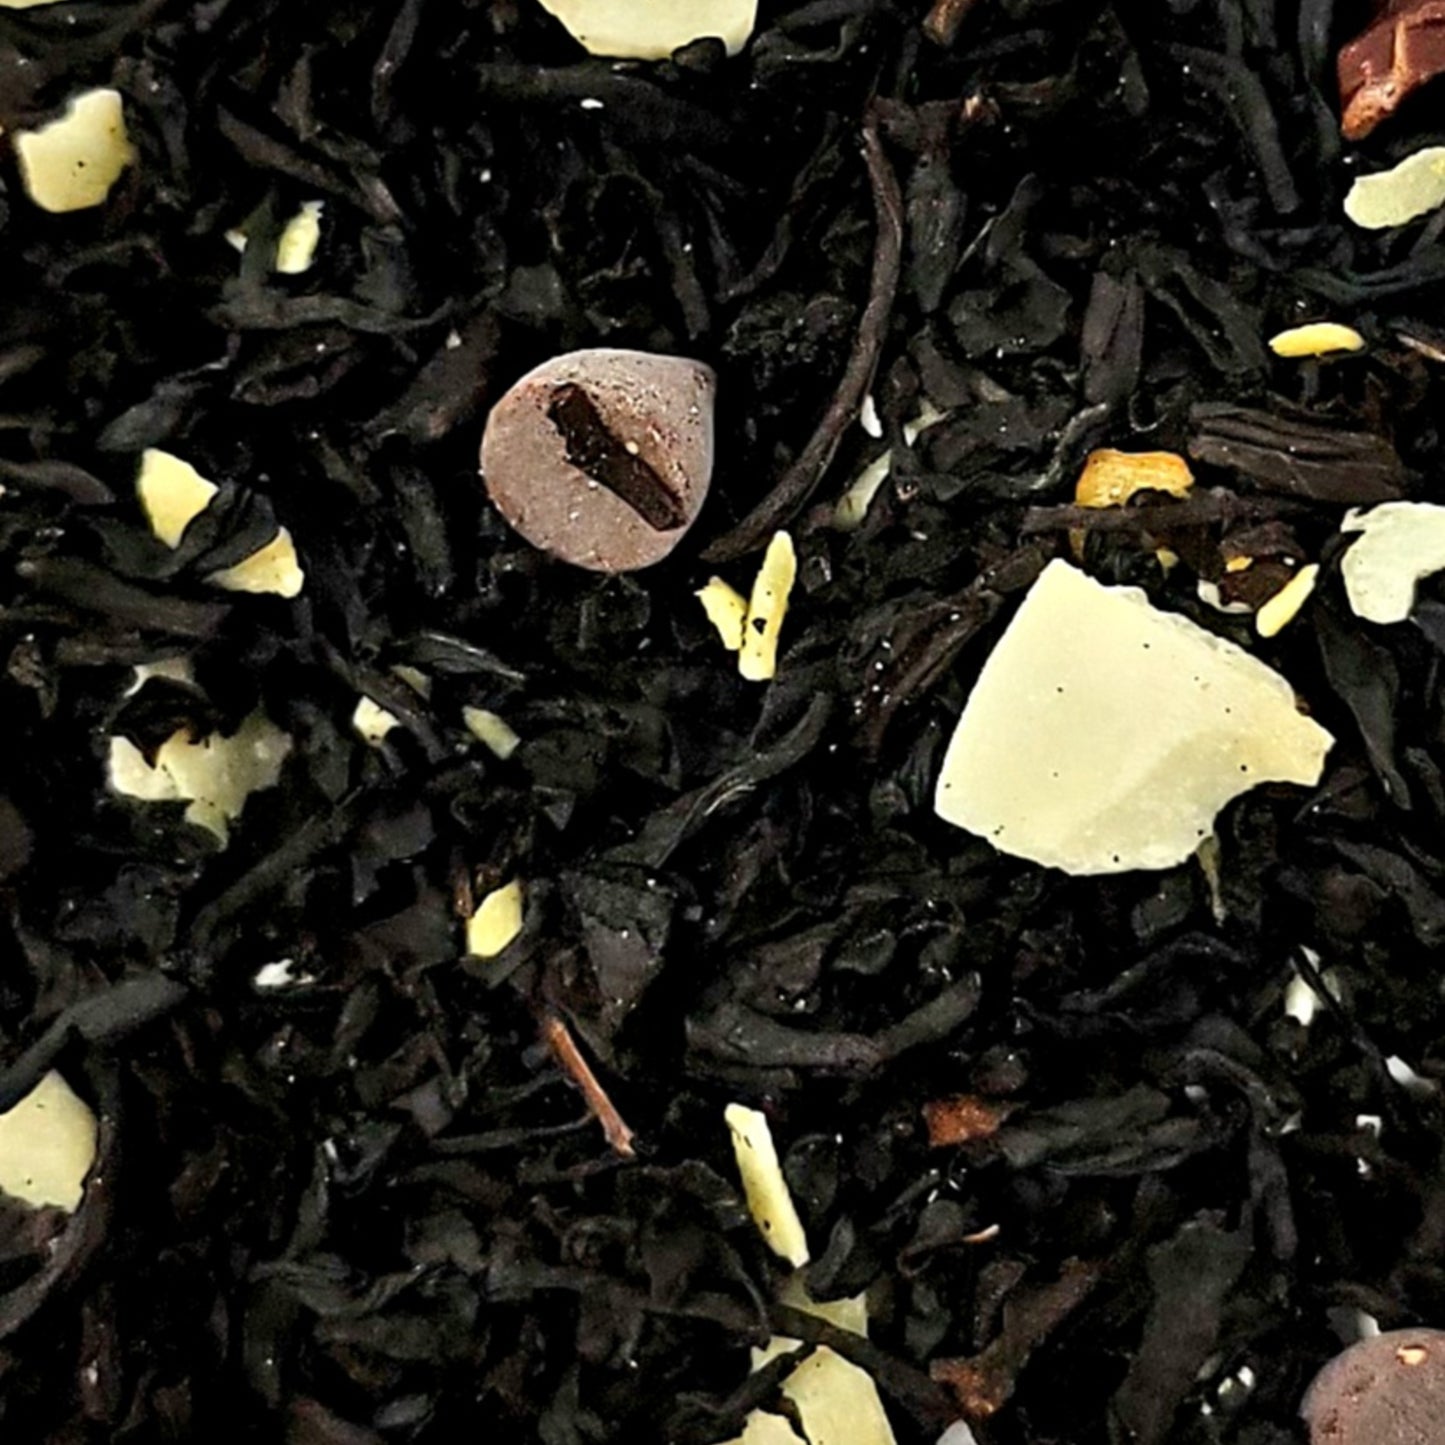 Almond Joy Loose-Leaf Black Tea (1 oz or 2 oz)